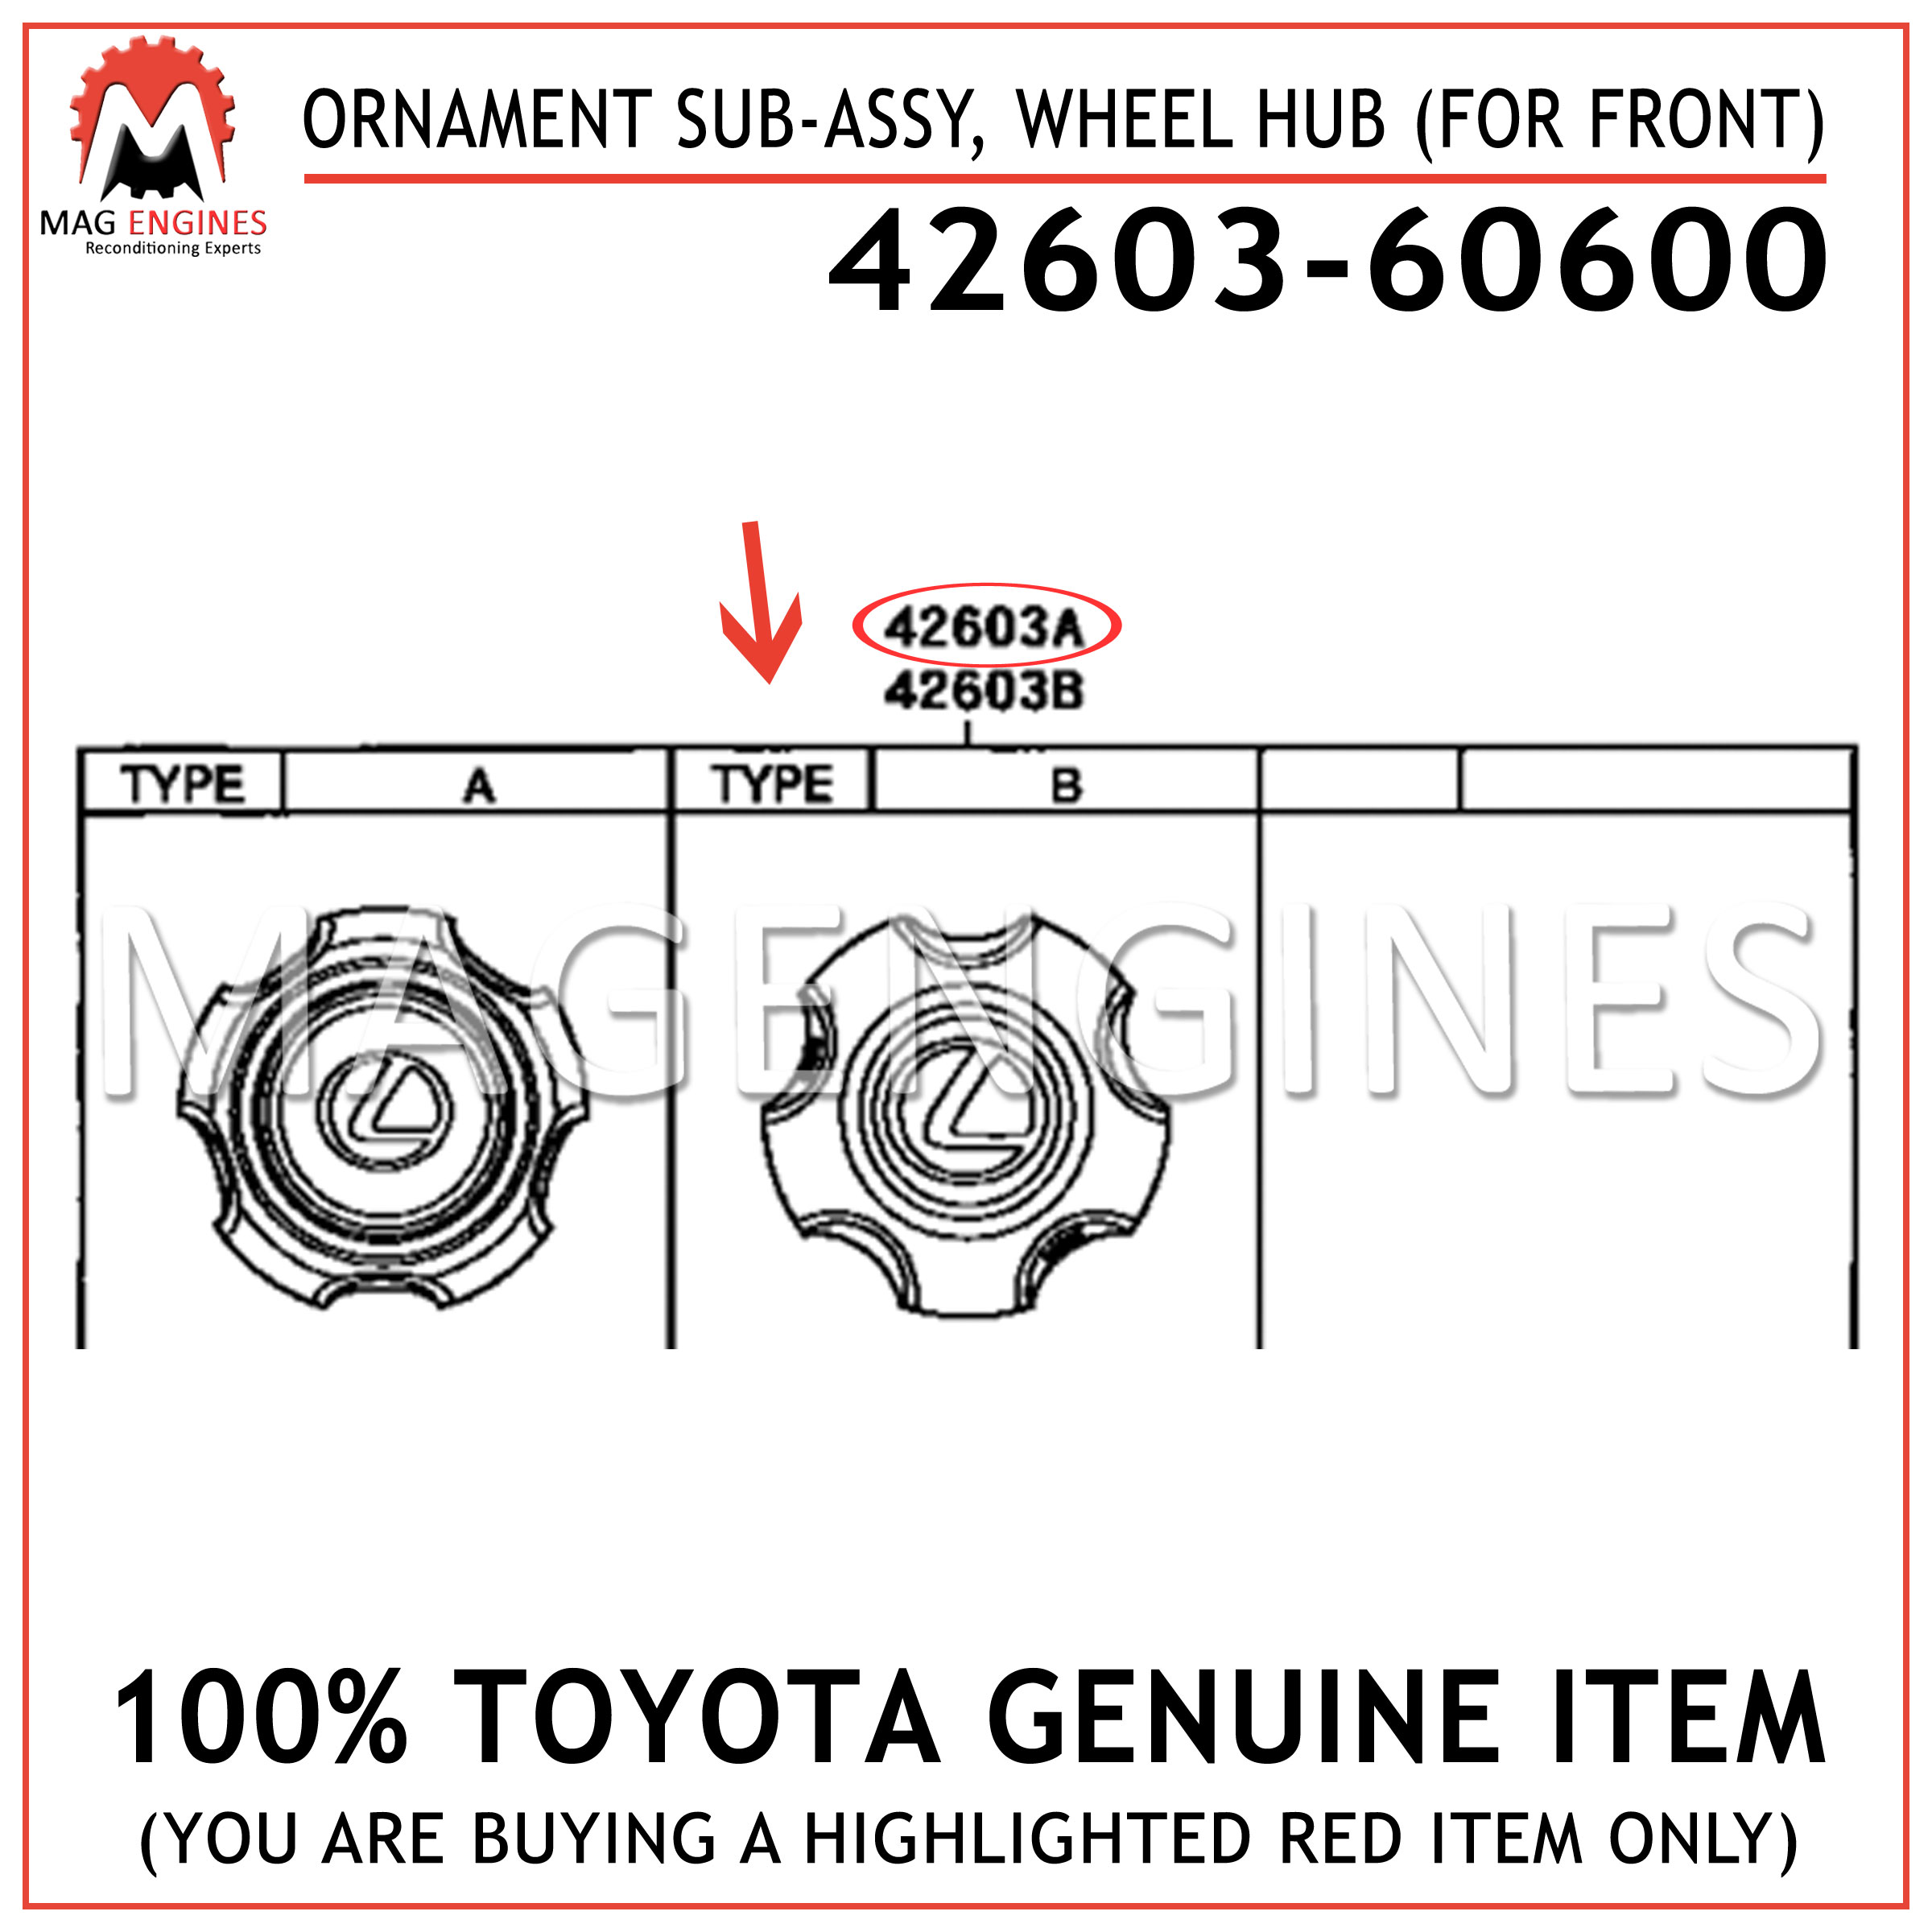 WHEEL HUB 4260360600 Genuine Toyota ORNAMENT SUB-ASSY FOR FRONT 42603-60600 